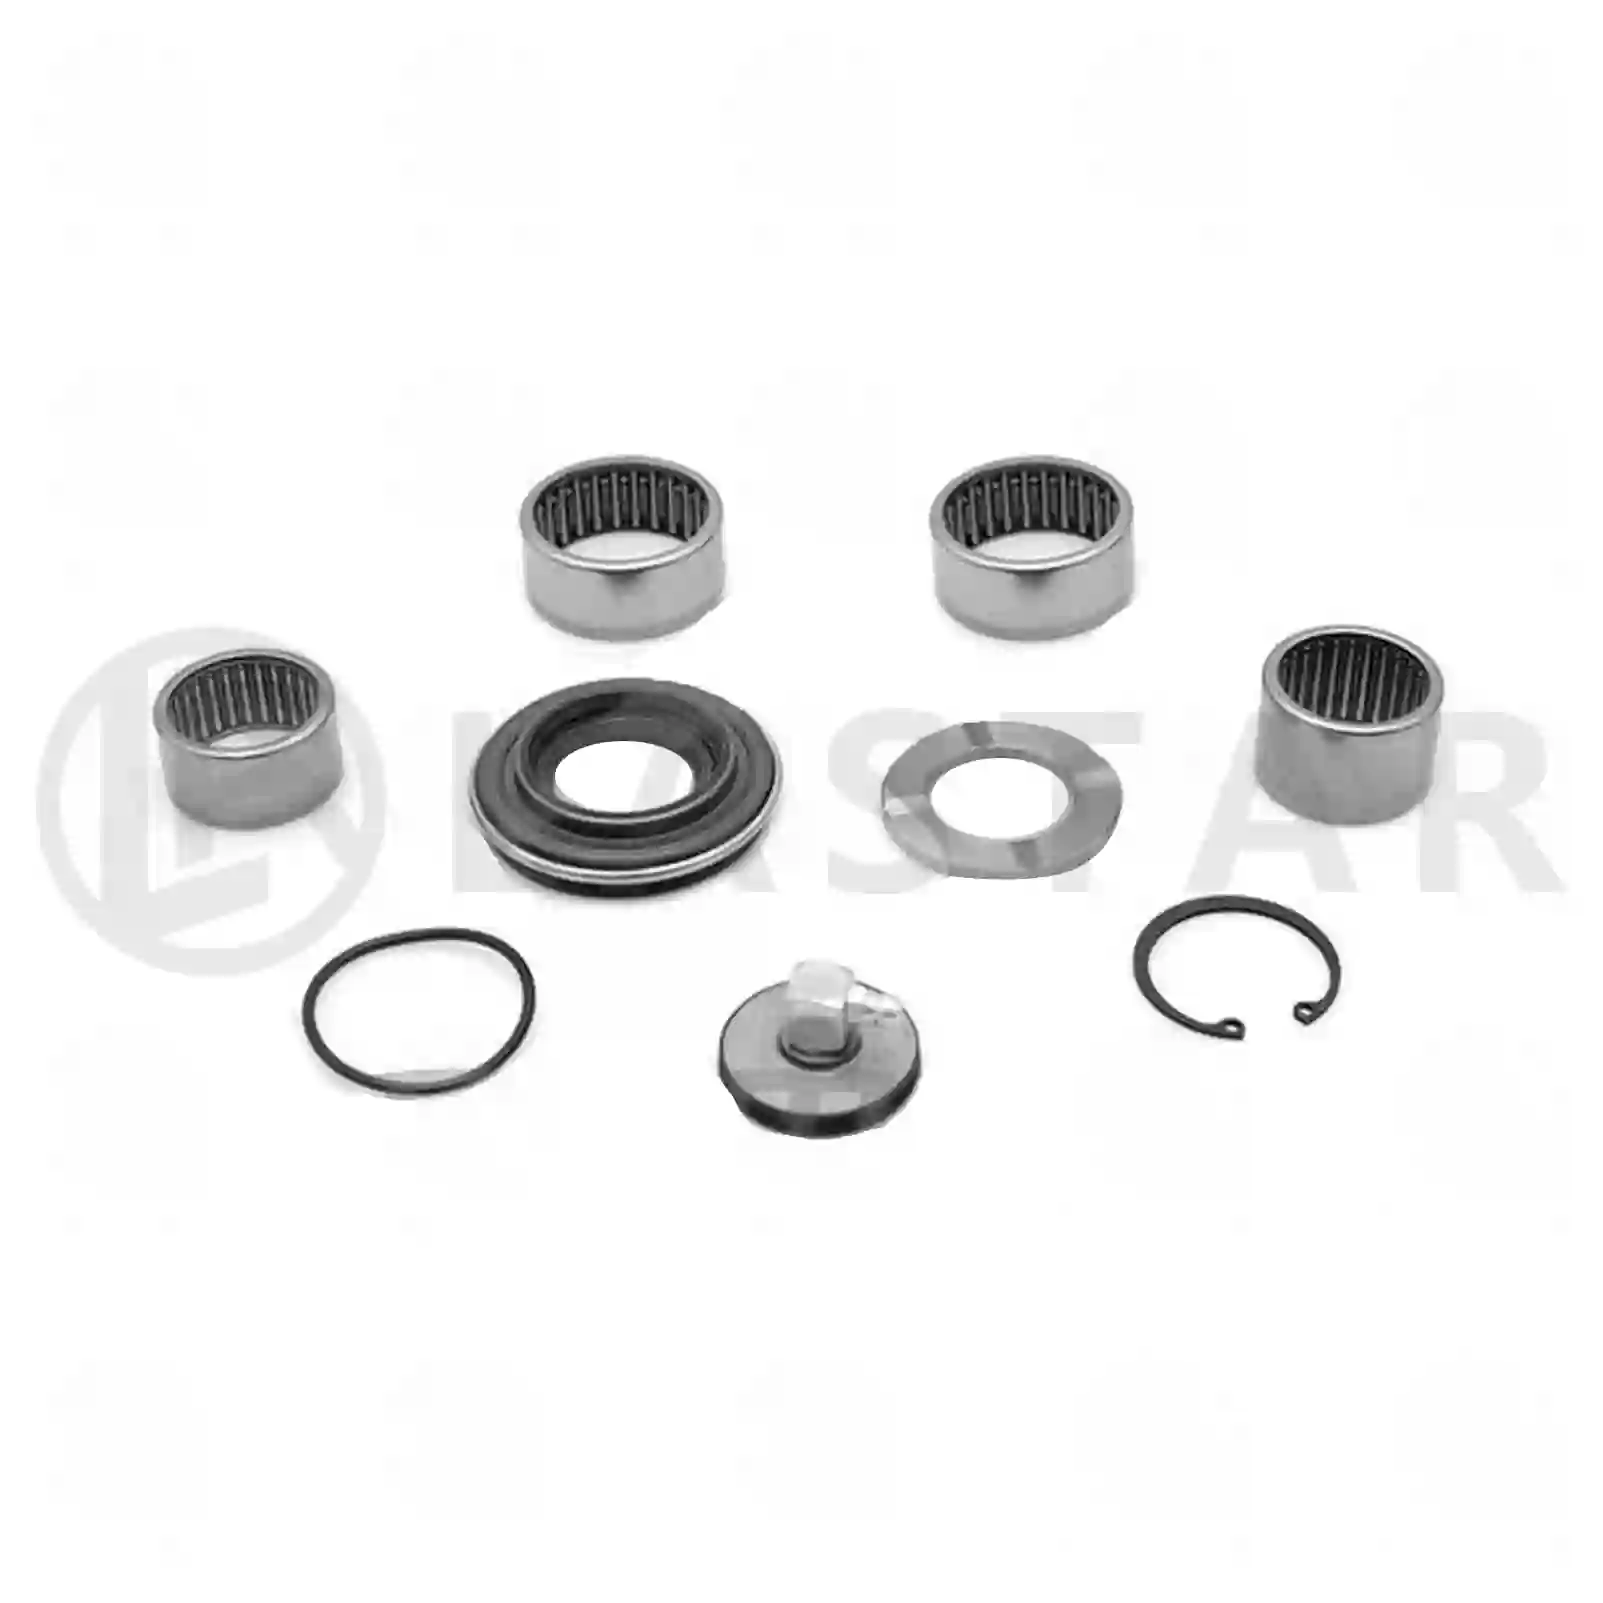 Gearbox Unit Needle bearing kit, la no: 77732032 ,  oem no:9807710 Lastar Spare Part | Truck Spare Parts, Auotomotive Spare Parts